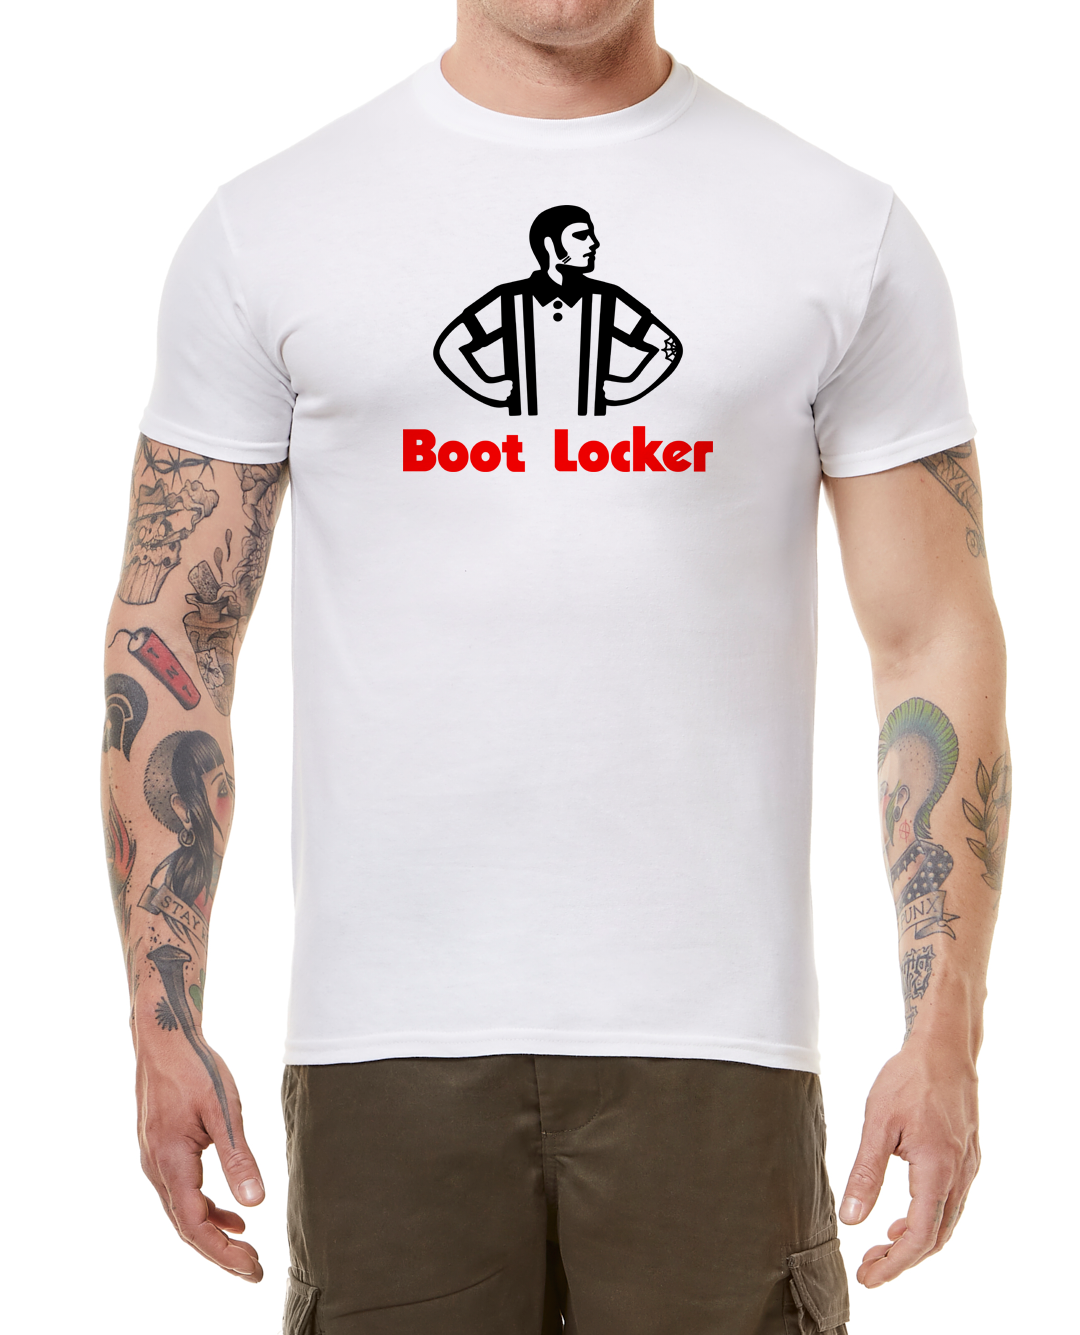 Boot locker